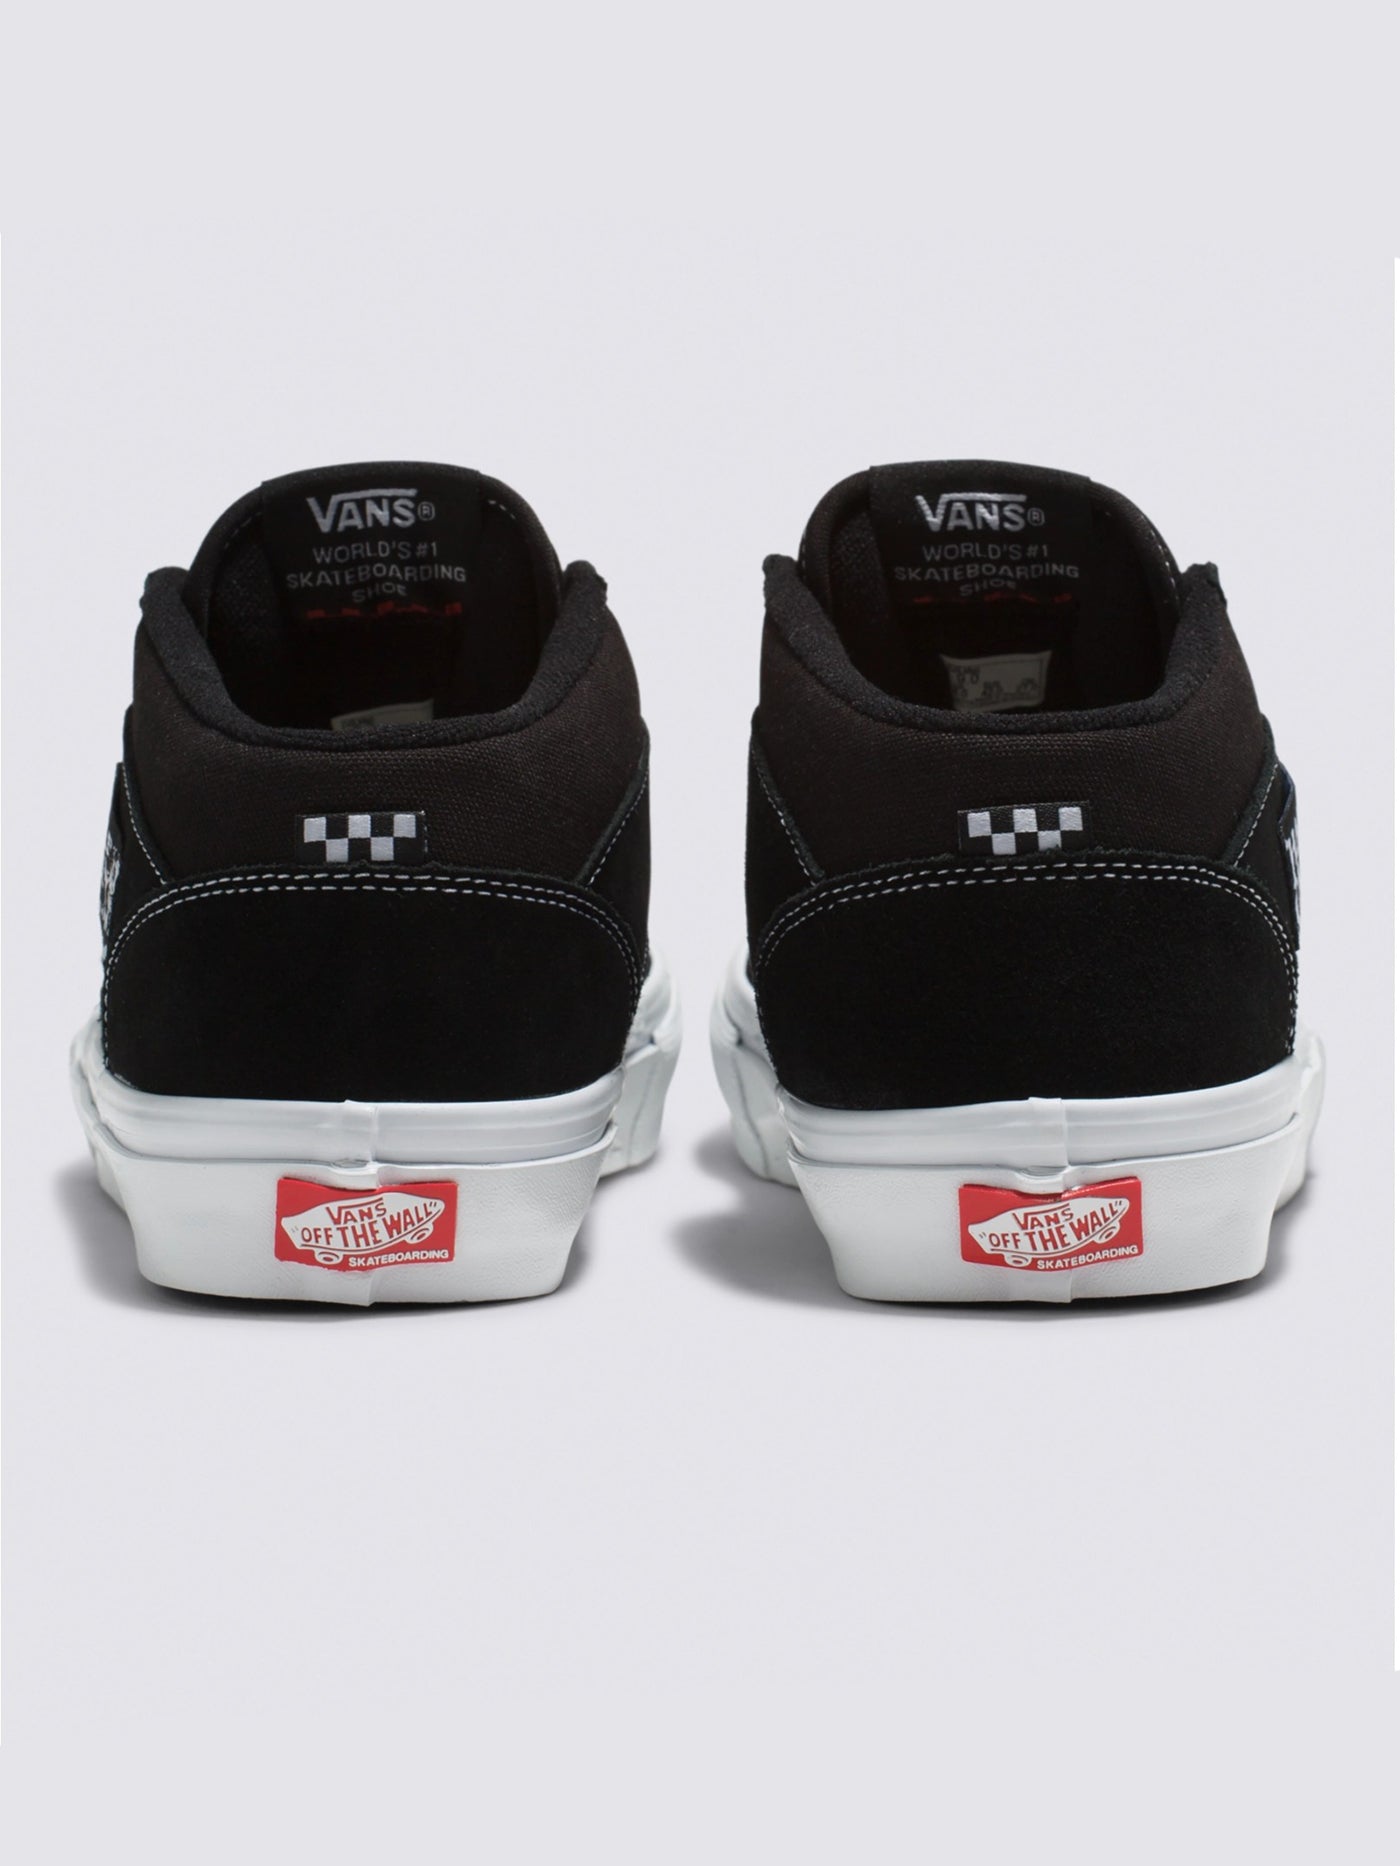 Vans Skate Half Cab Black/White Shoes